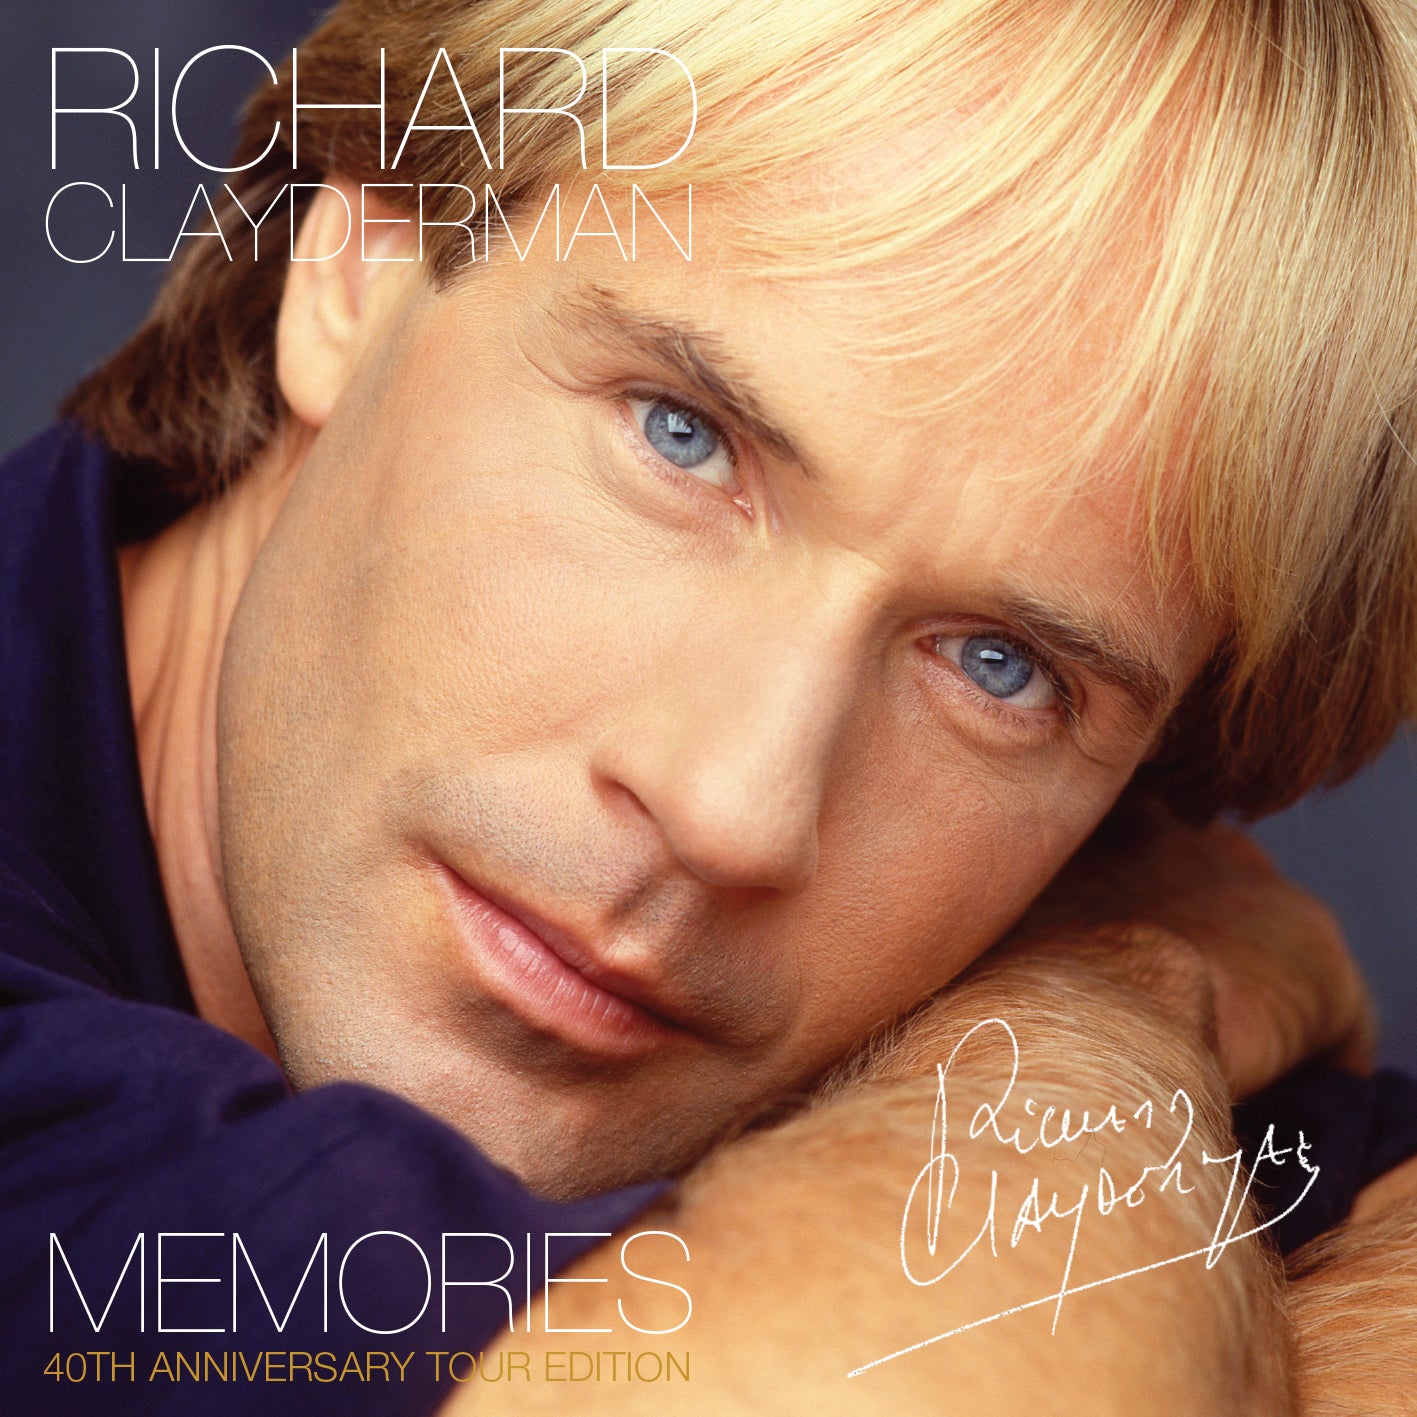 RICHARD CLAYDERMAN - MEMORIES (4OTH ANNIVERSARY TOUR EDITION) 2CD